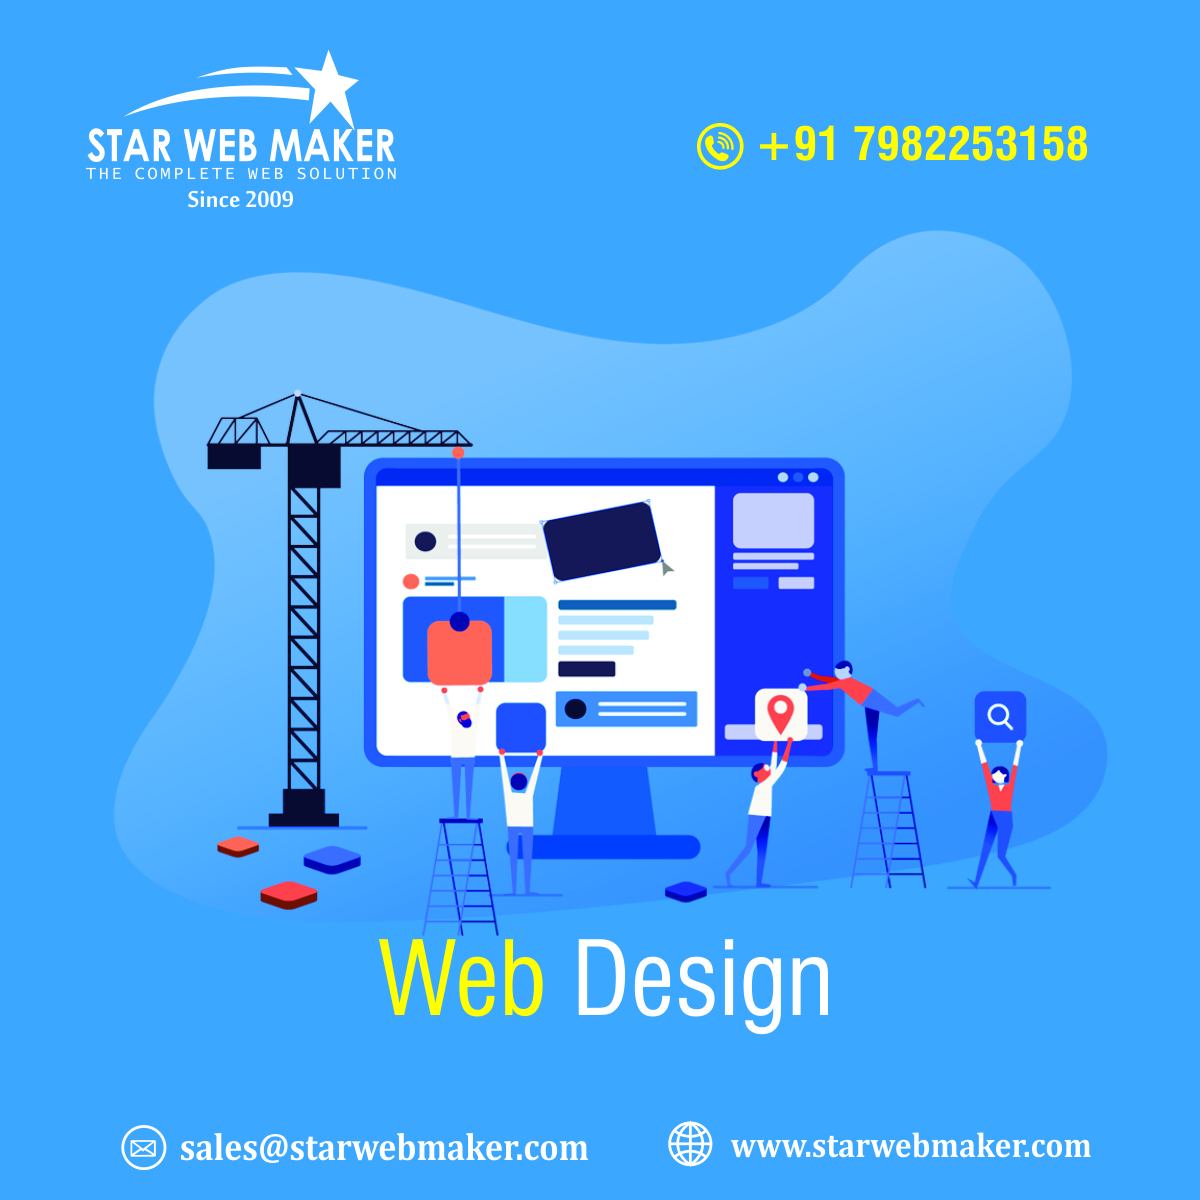 Website Design & Web Development Company in Noida: Star Web Maker